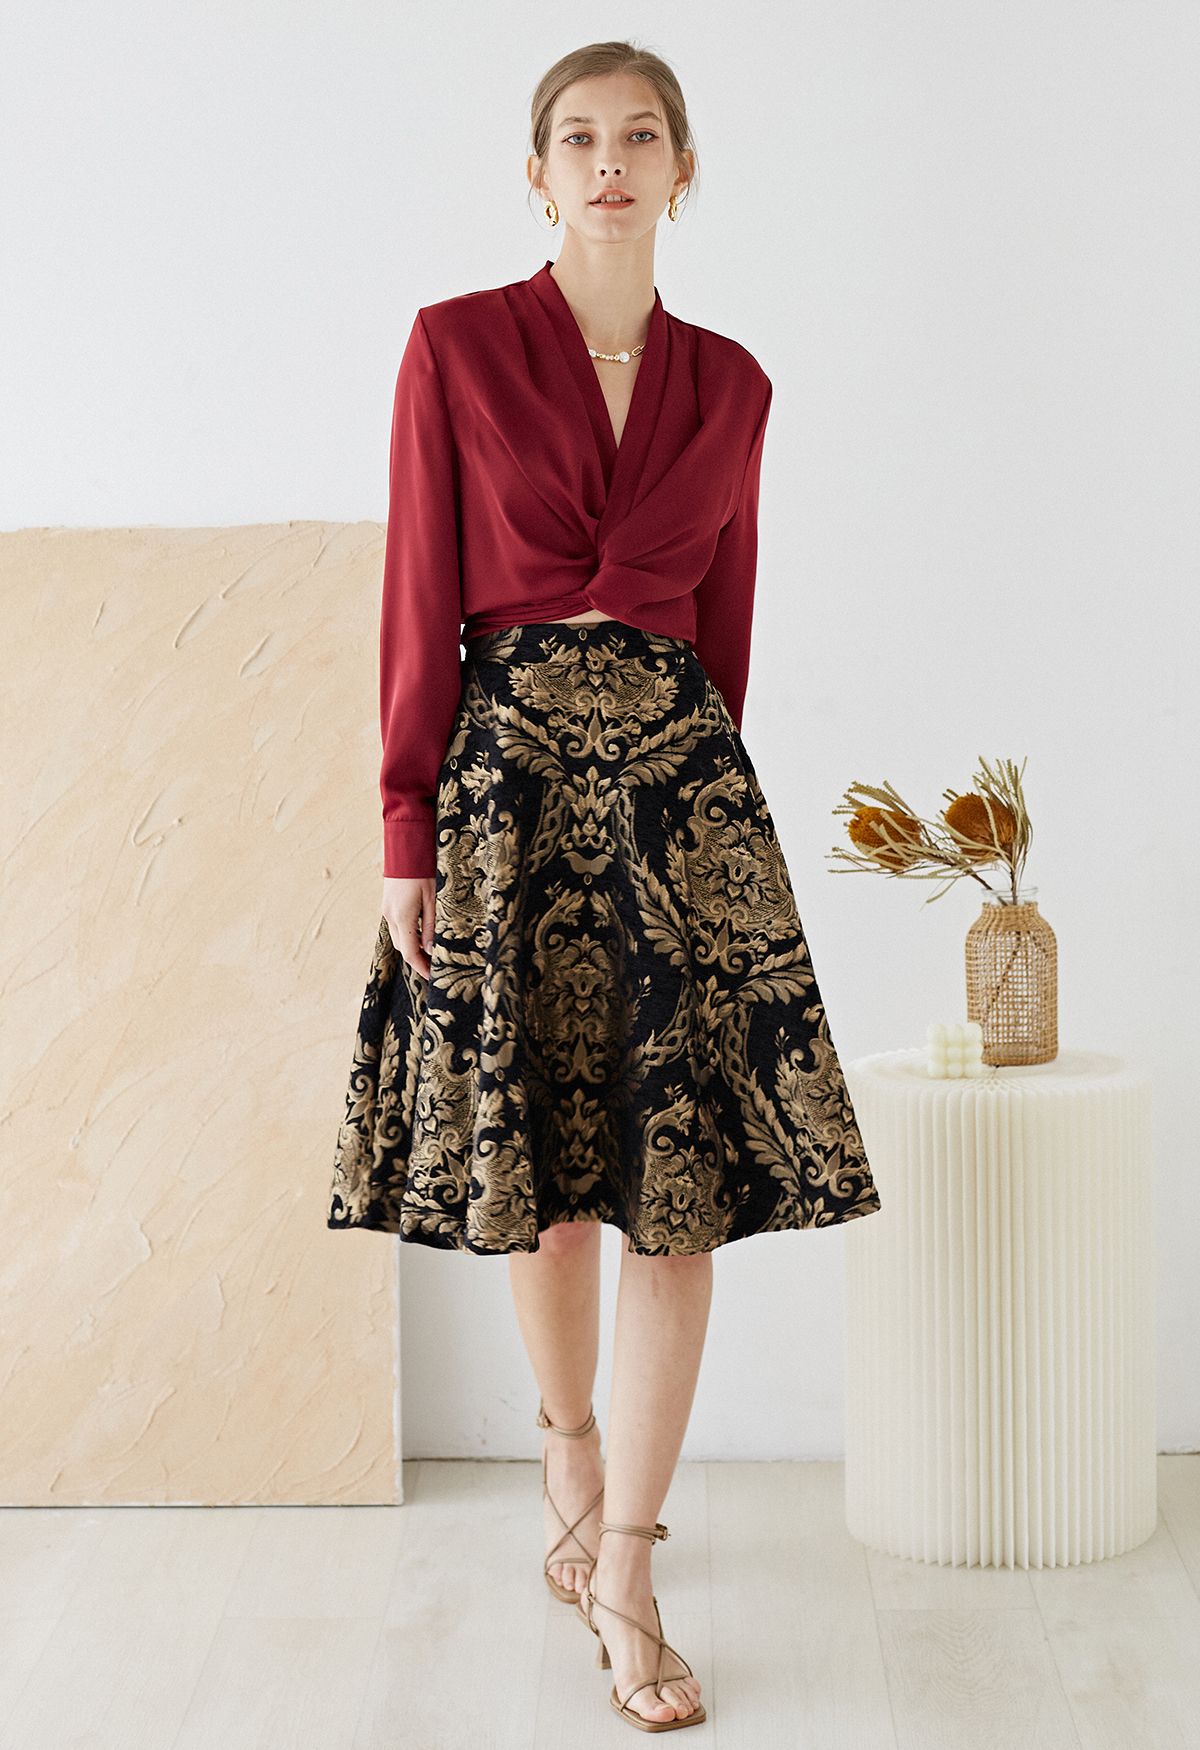 Golden Bouquet Jacquard Midi Skirt - Retro, Indie and Unique Fashion